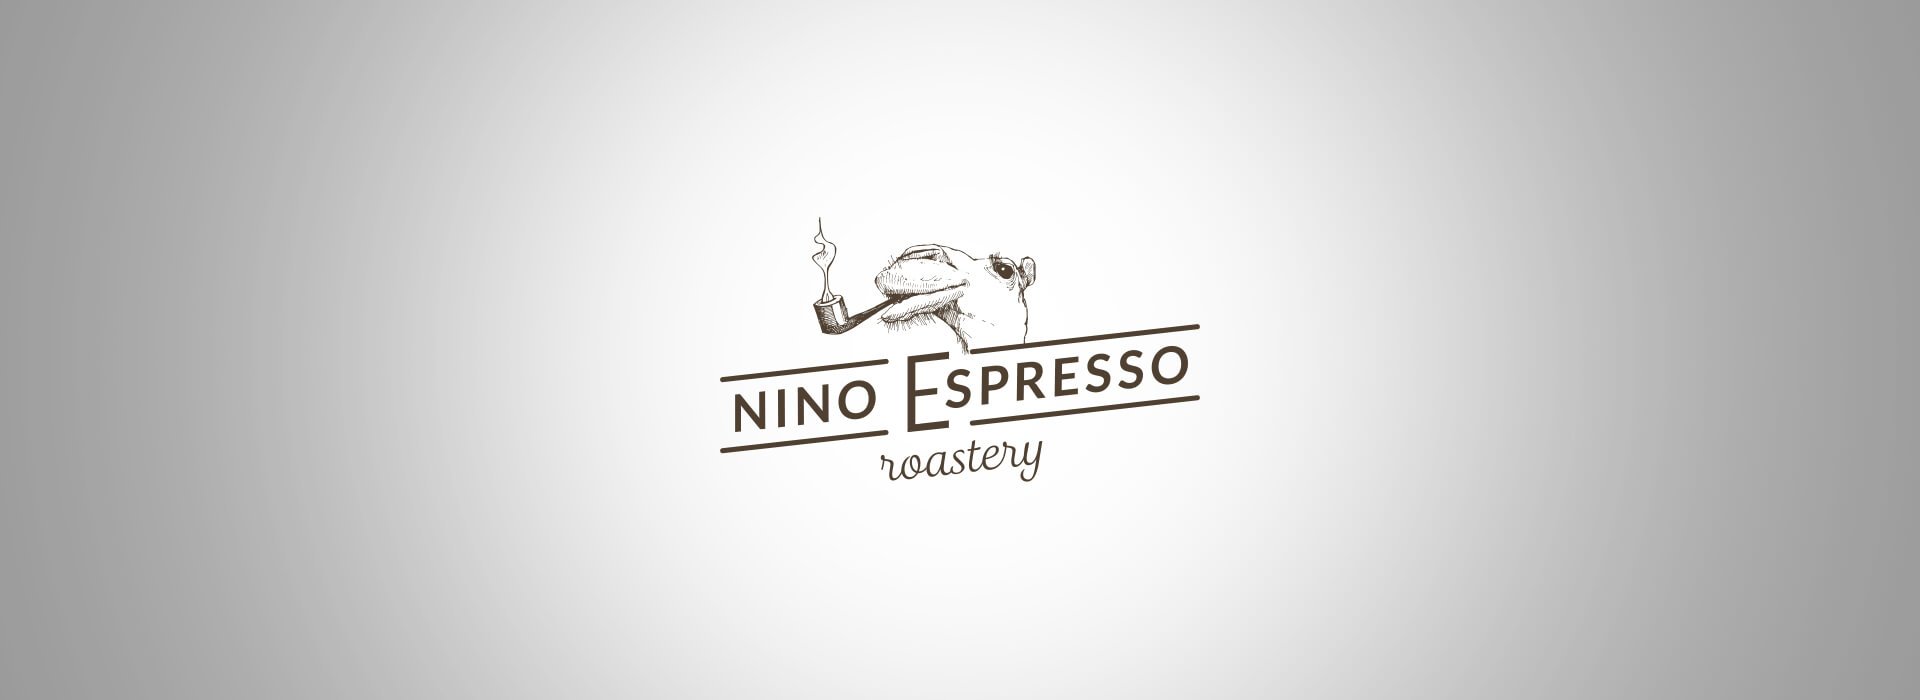 Návrh loga Nino Espresso